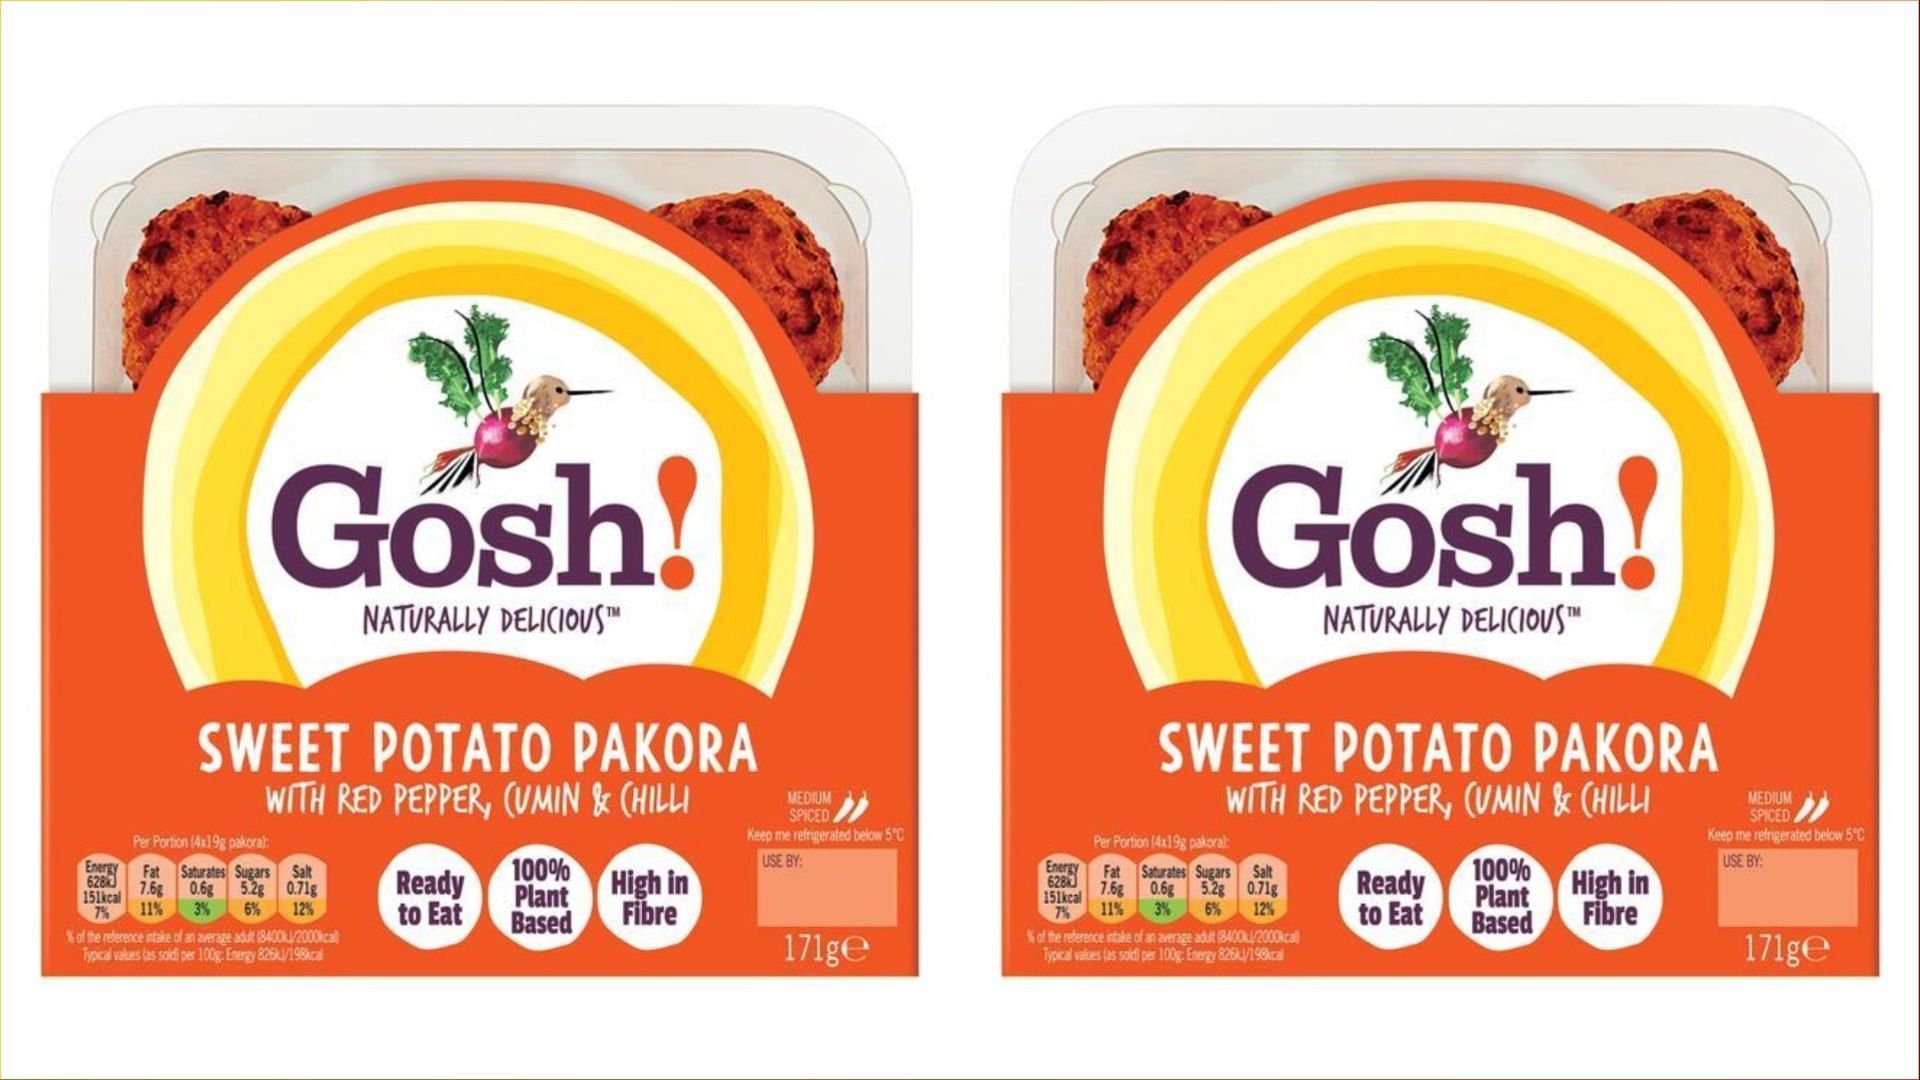 The recalled Gosh! Sweet Potato Pakora and Falafel products were exclusively sold at Tesco, Asda, Morrisons, Aldi, and Ocado (Image via FSA)